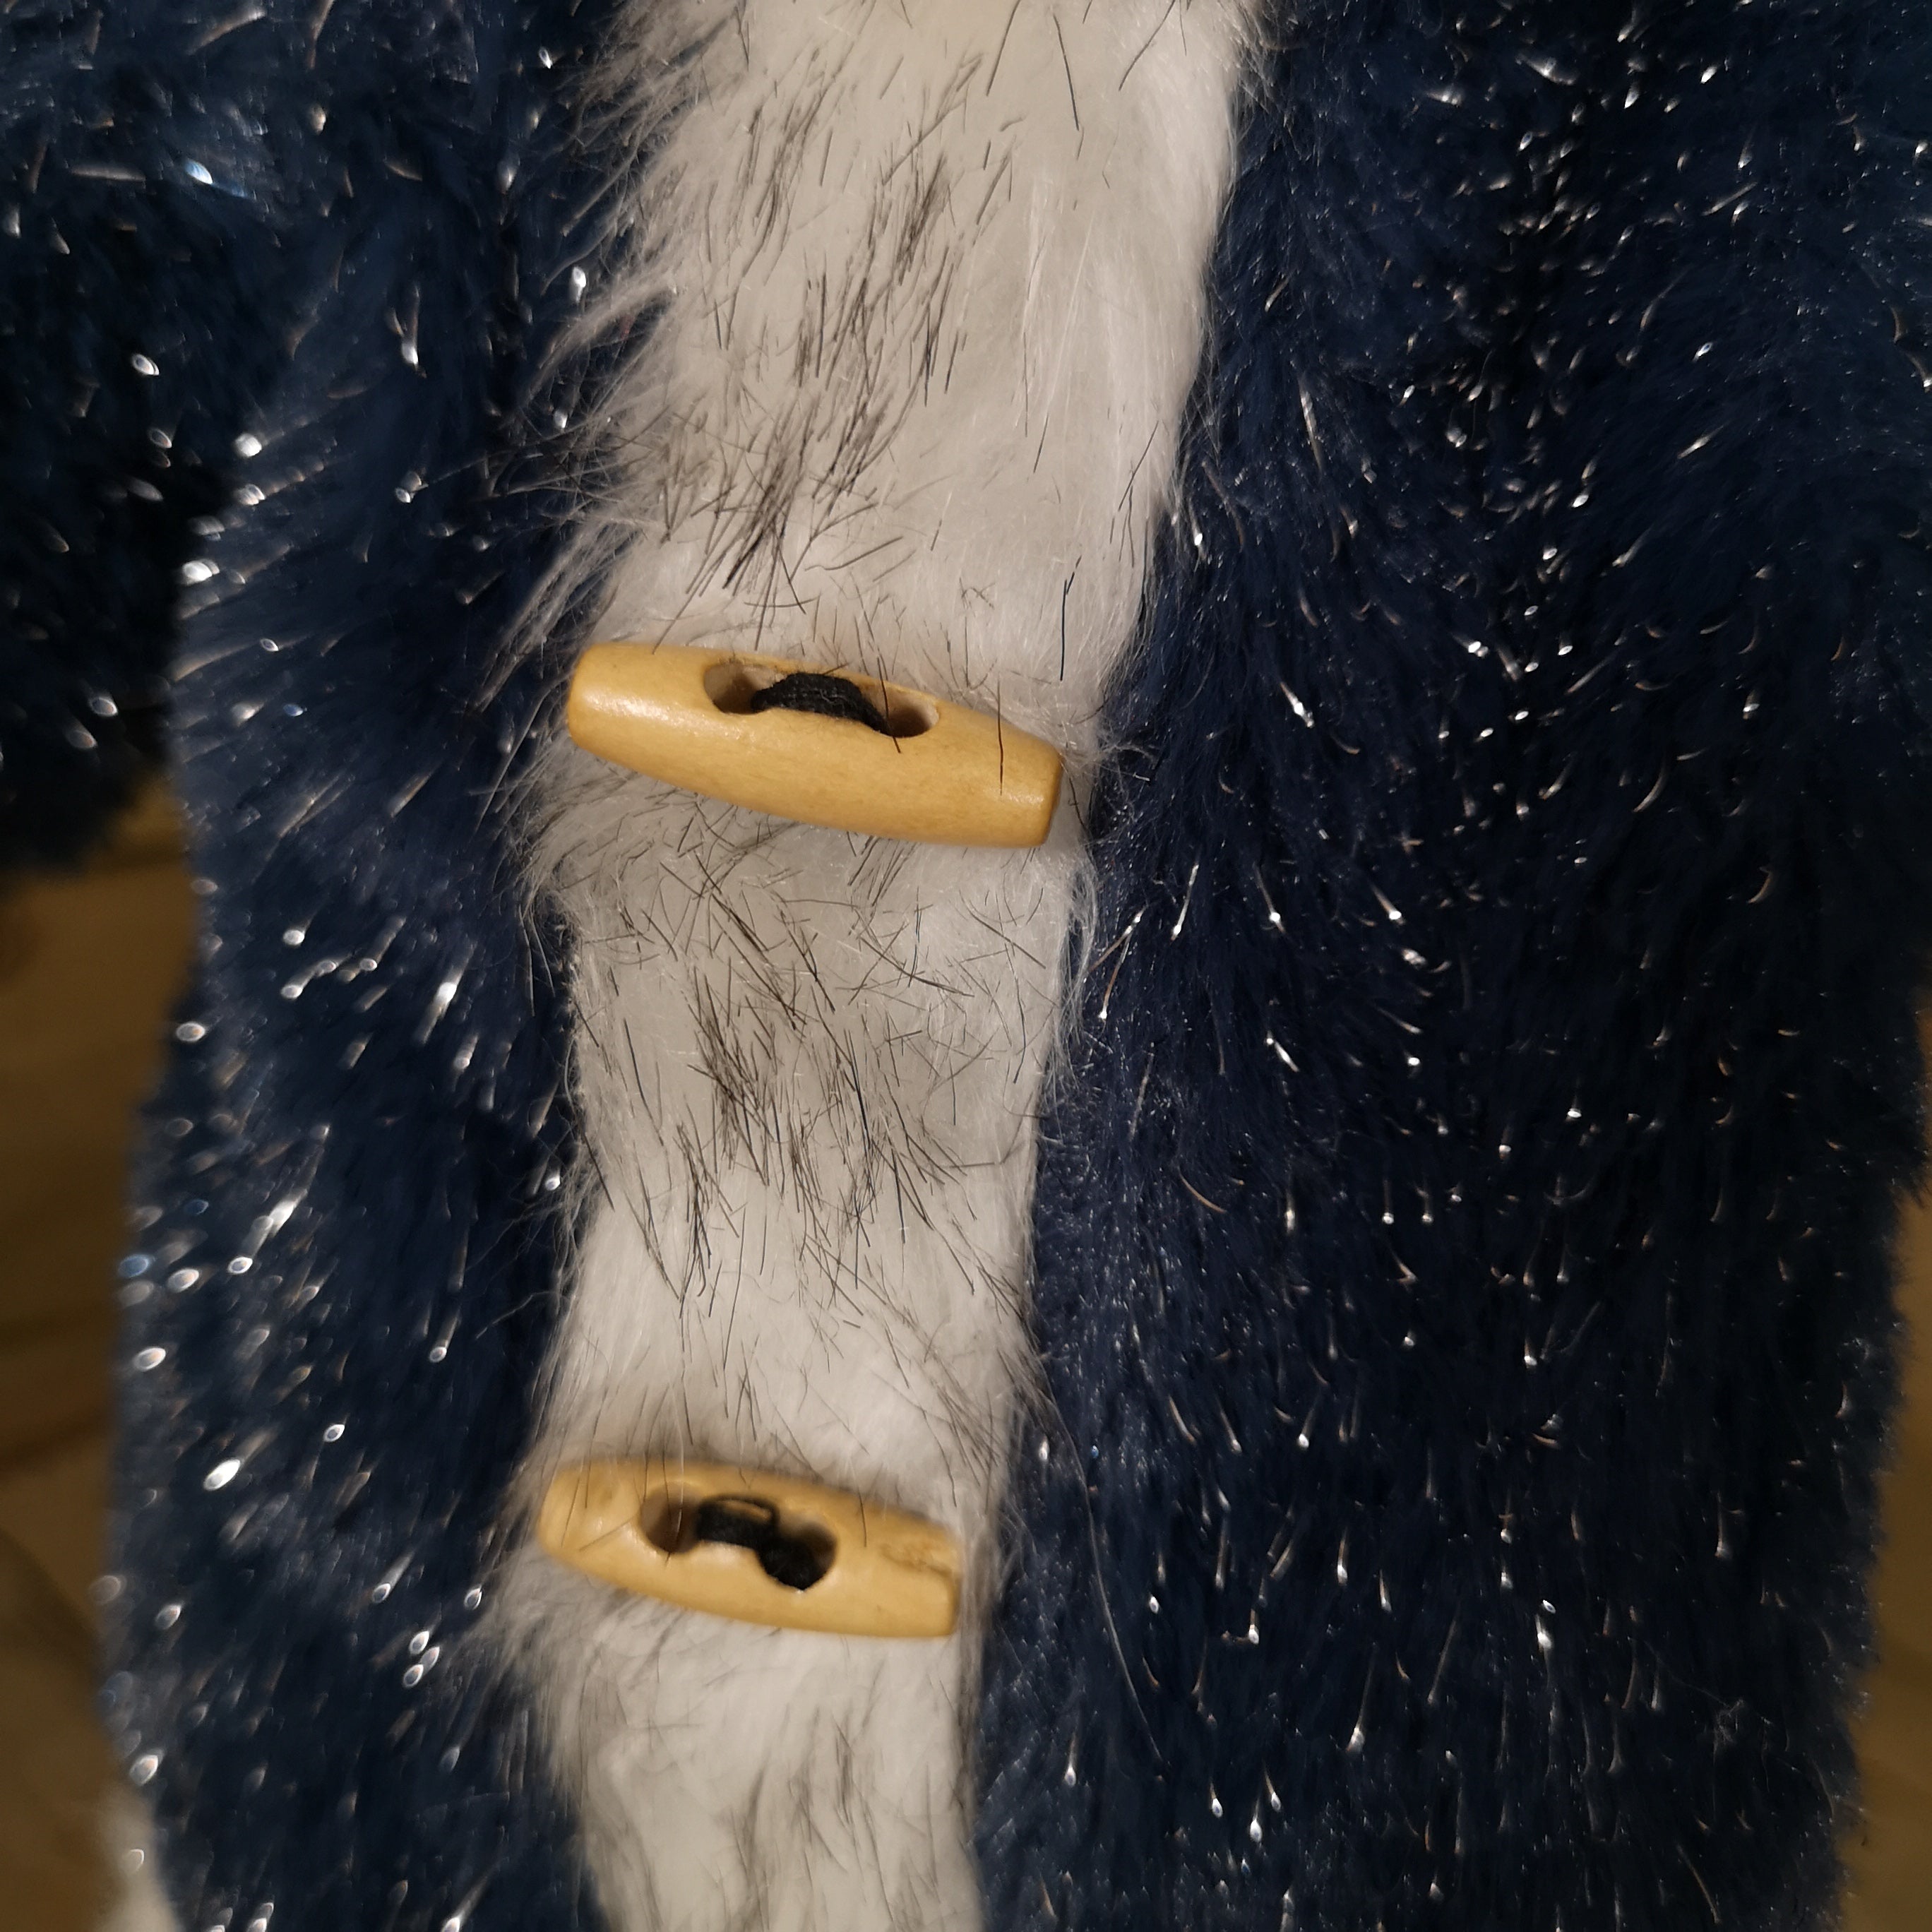 47cm Standing Plush Christmas Winter Polar Bear with Blue Coat and Fur Trim